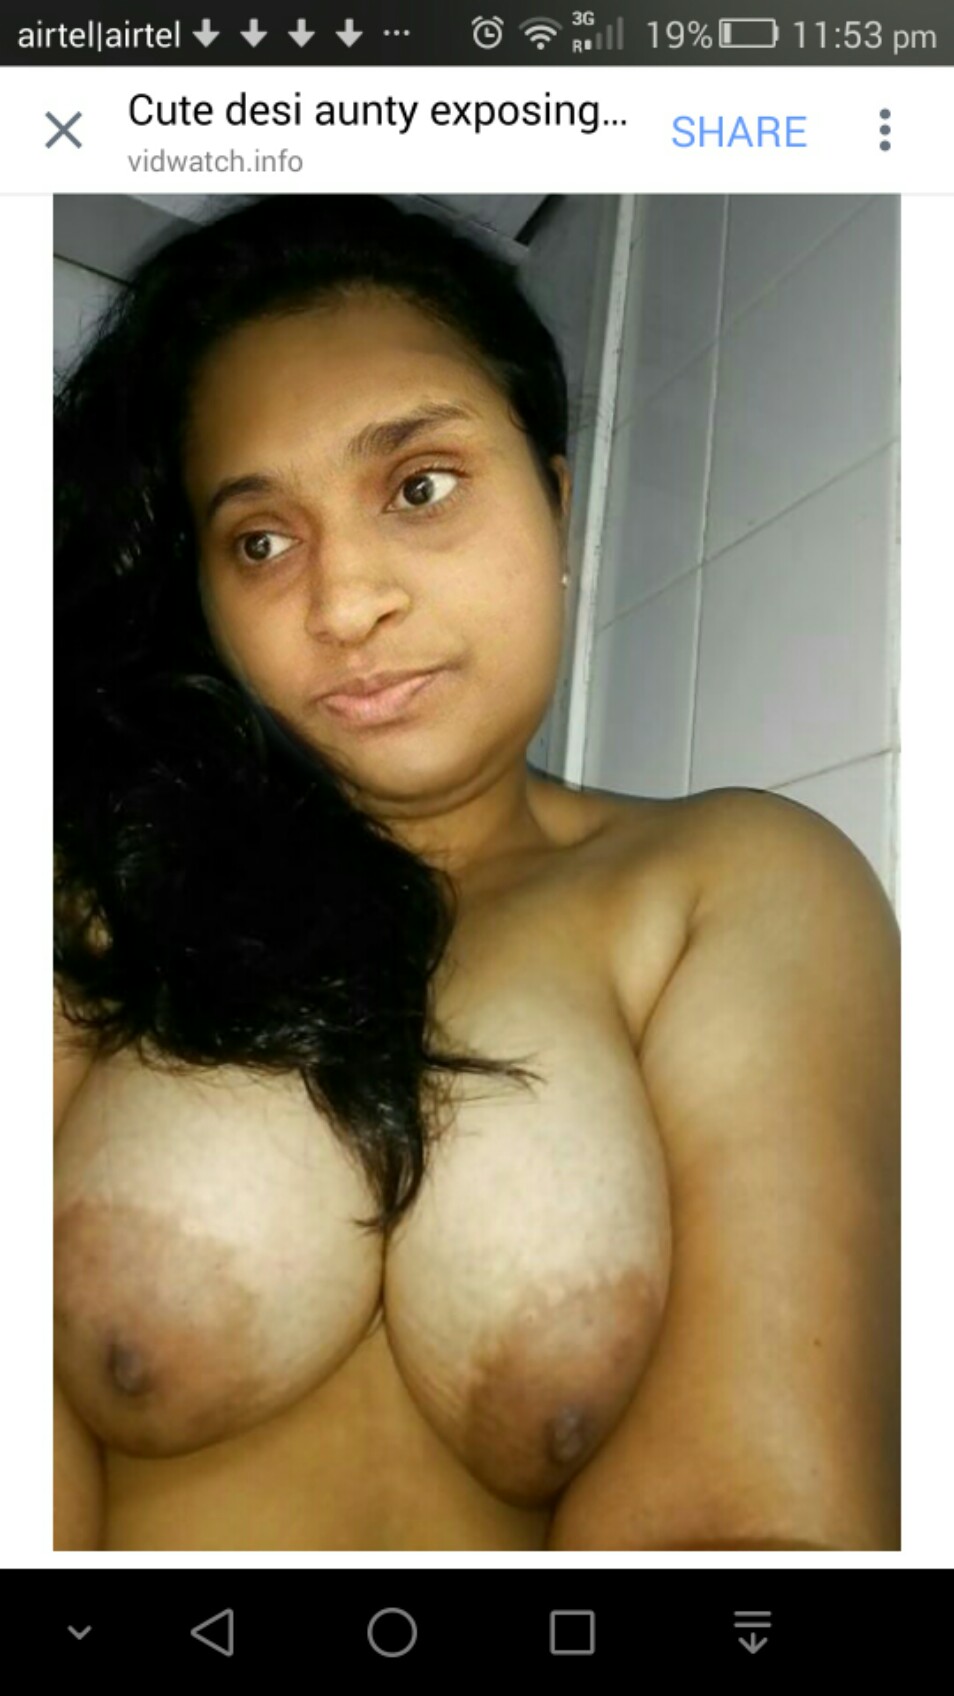 Mallu girl nudes showing boobs